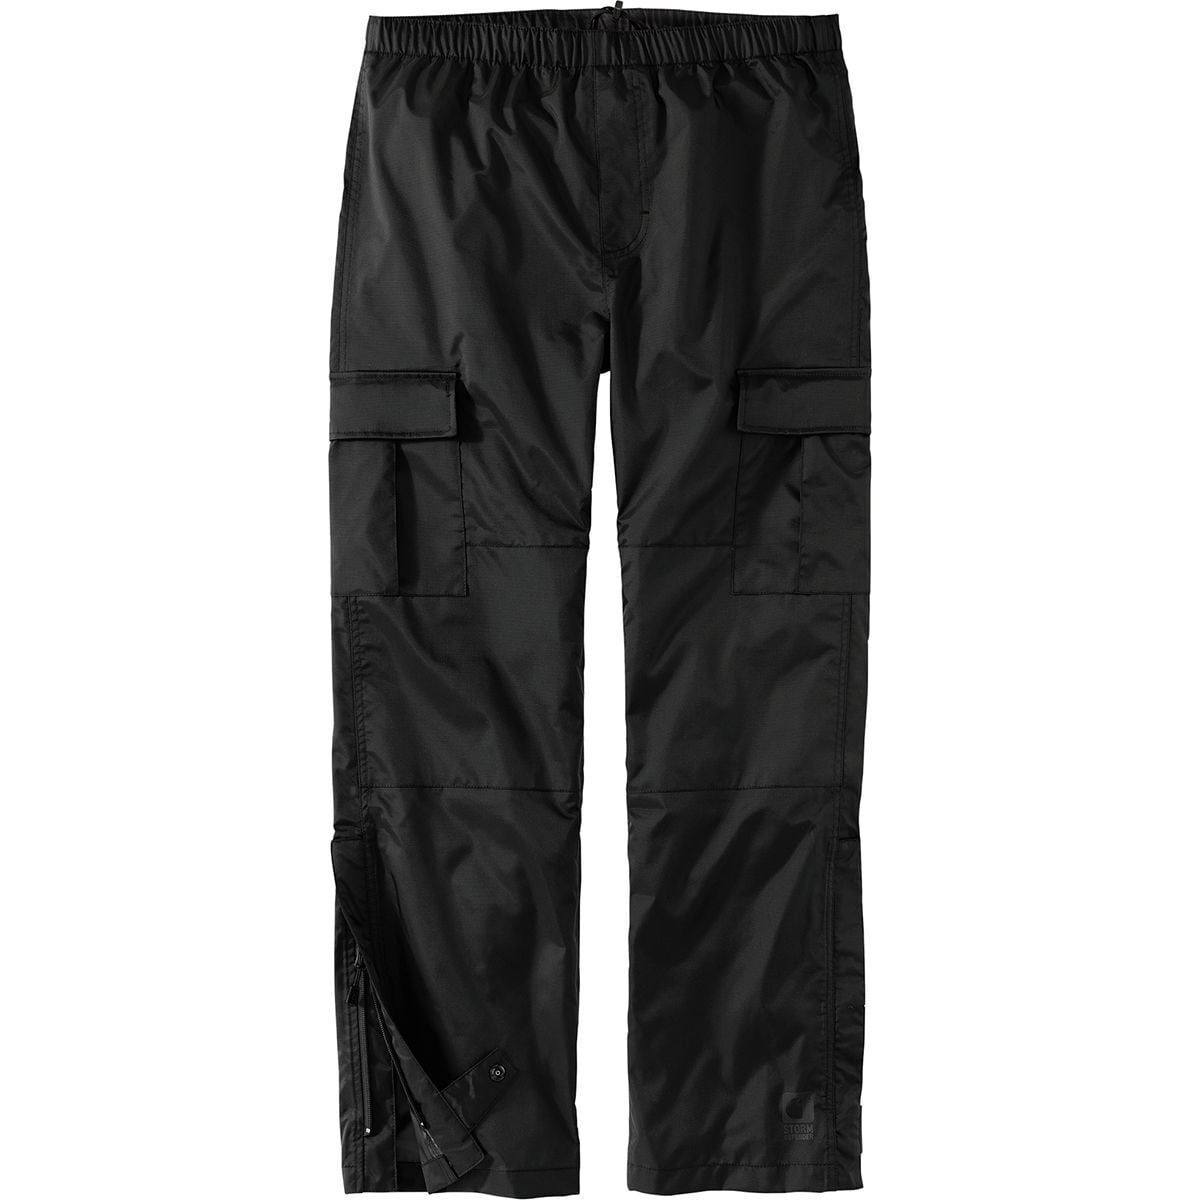 Carhartt Dry Harbor Pant - Men's - Clothing